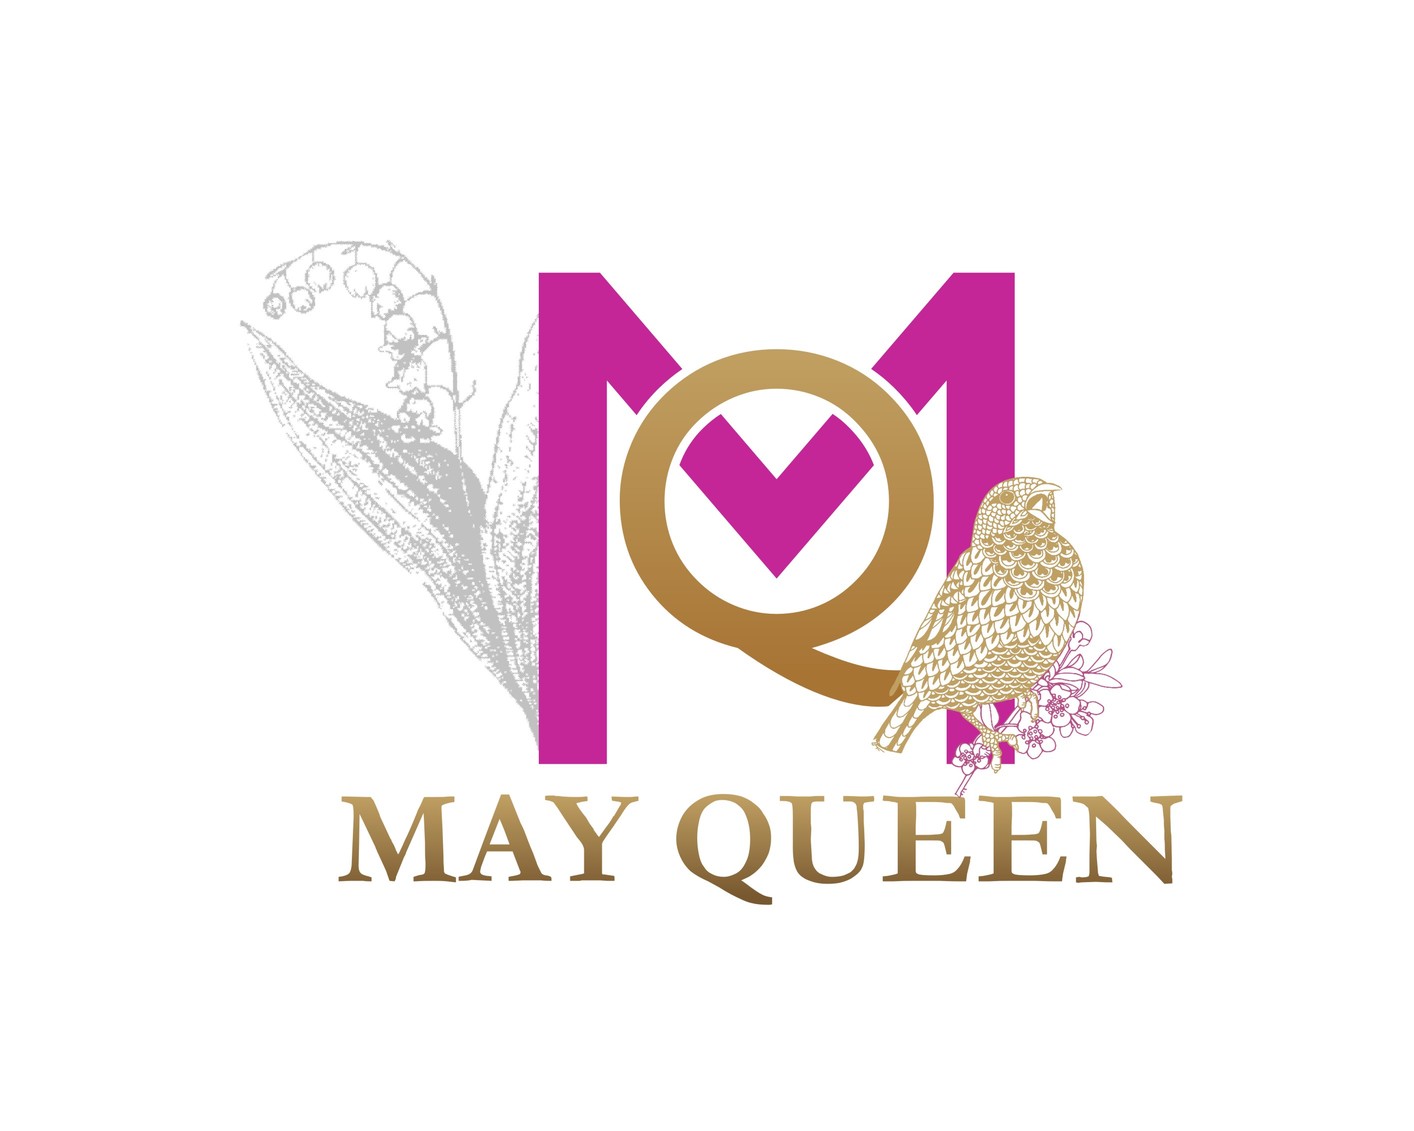 May Queen Logo Design